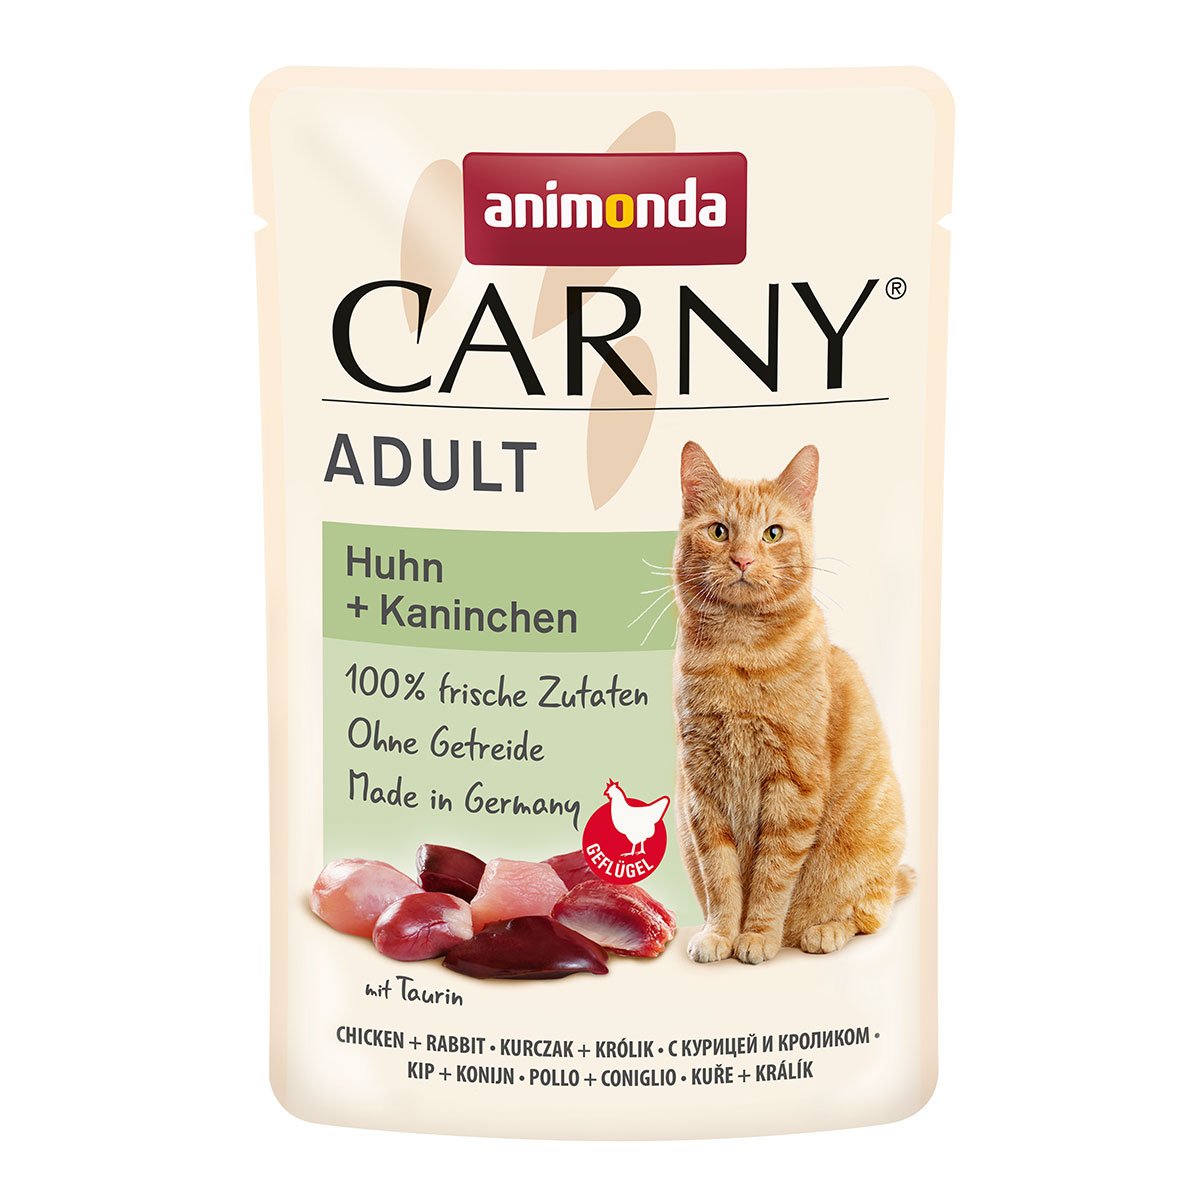 animonda Carny Adult Huhn + Kaninchen 24x85g von animonda Carny